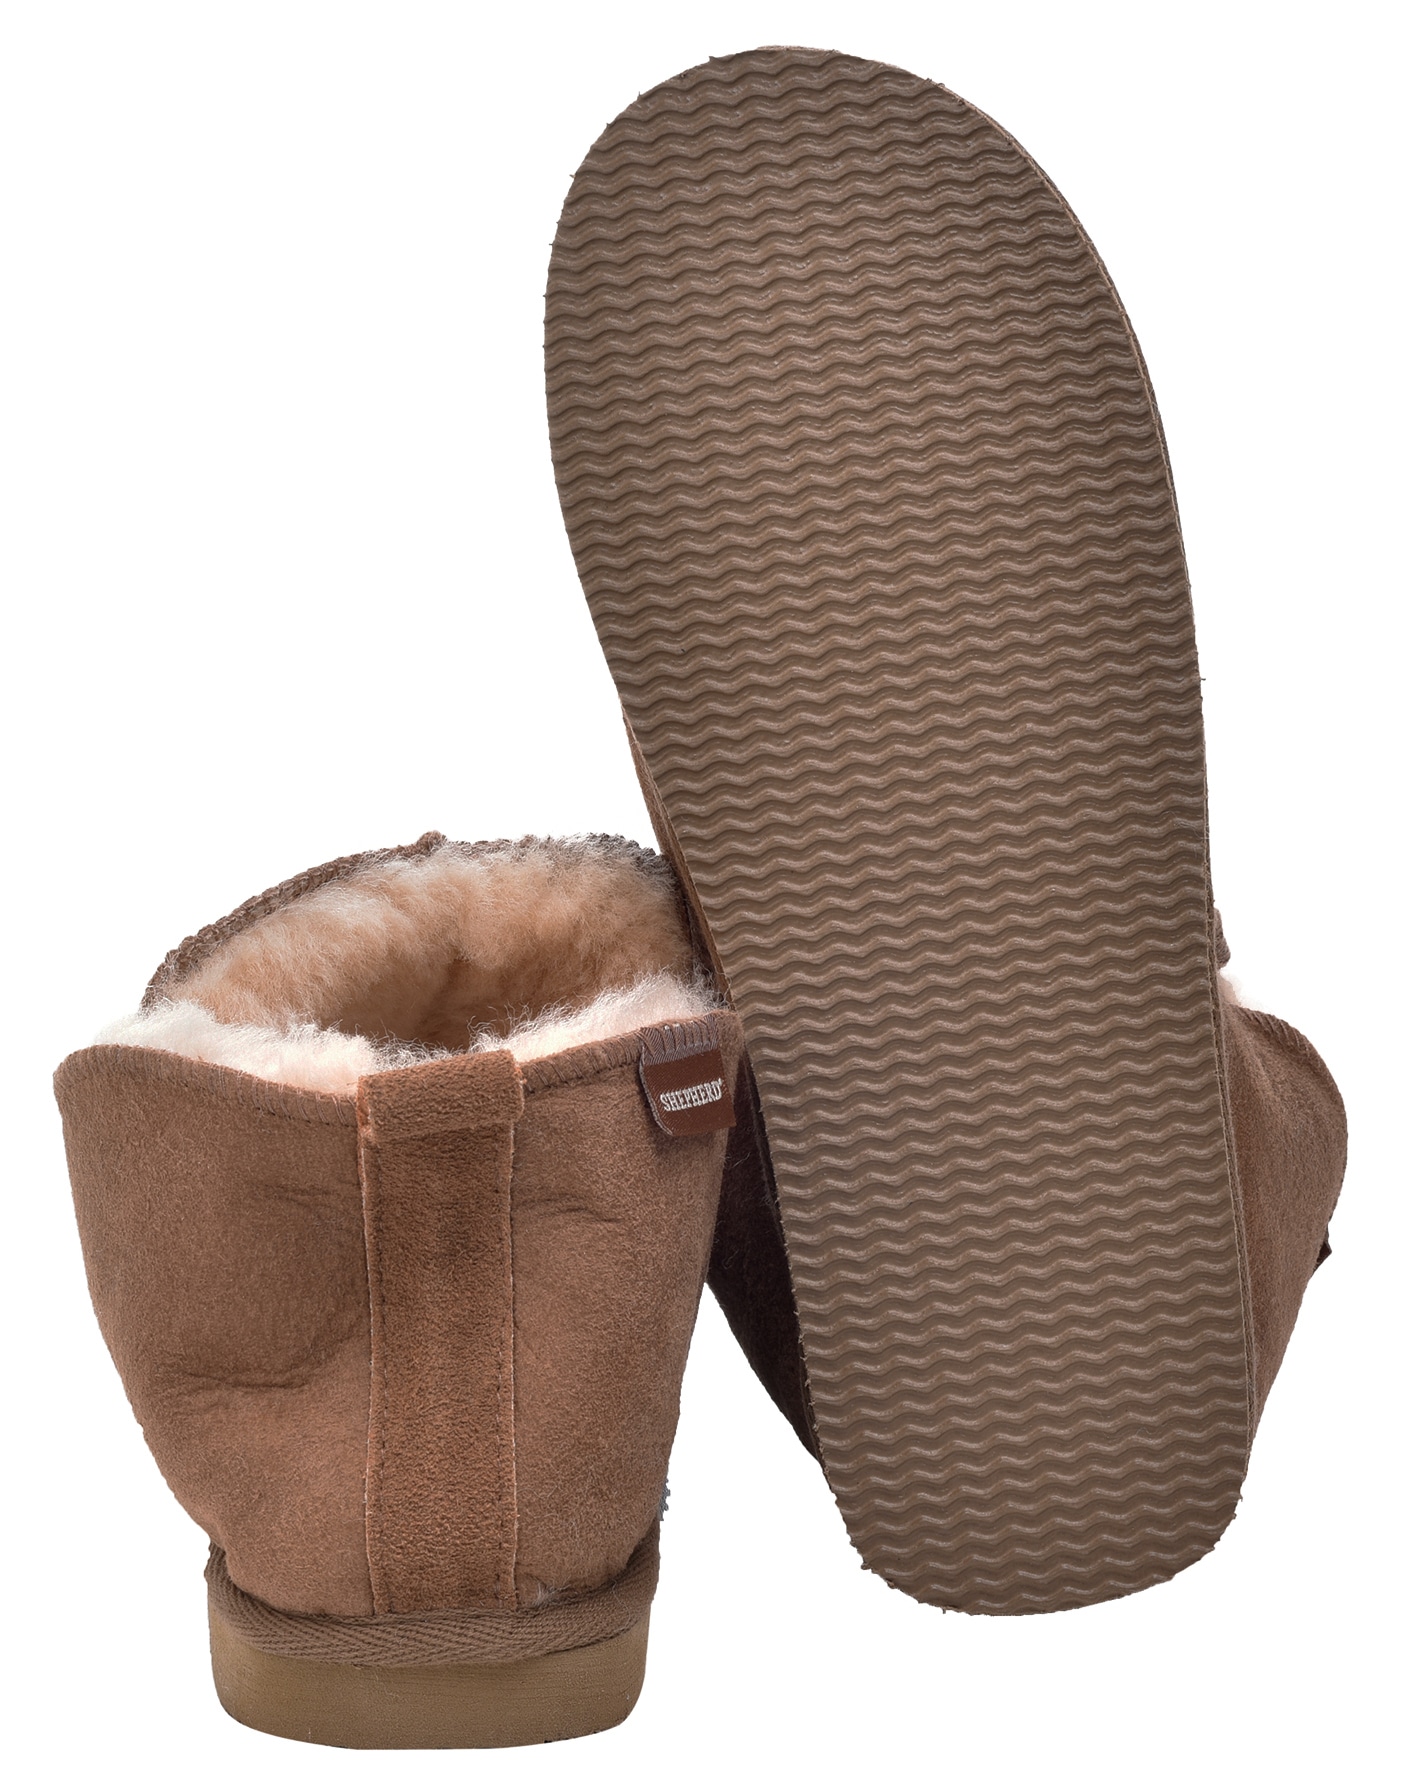 Men's Sheepskin Lined Slipper Boots with EVA Sole | Fruugo BH